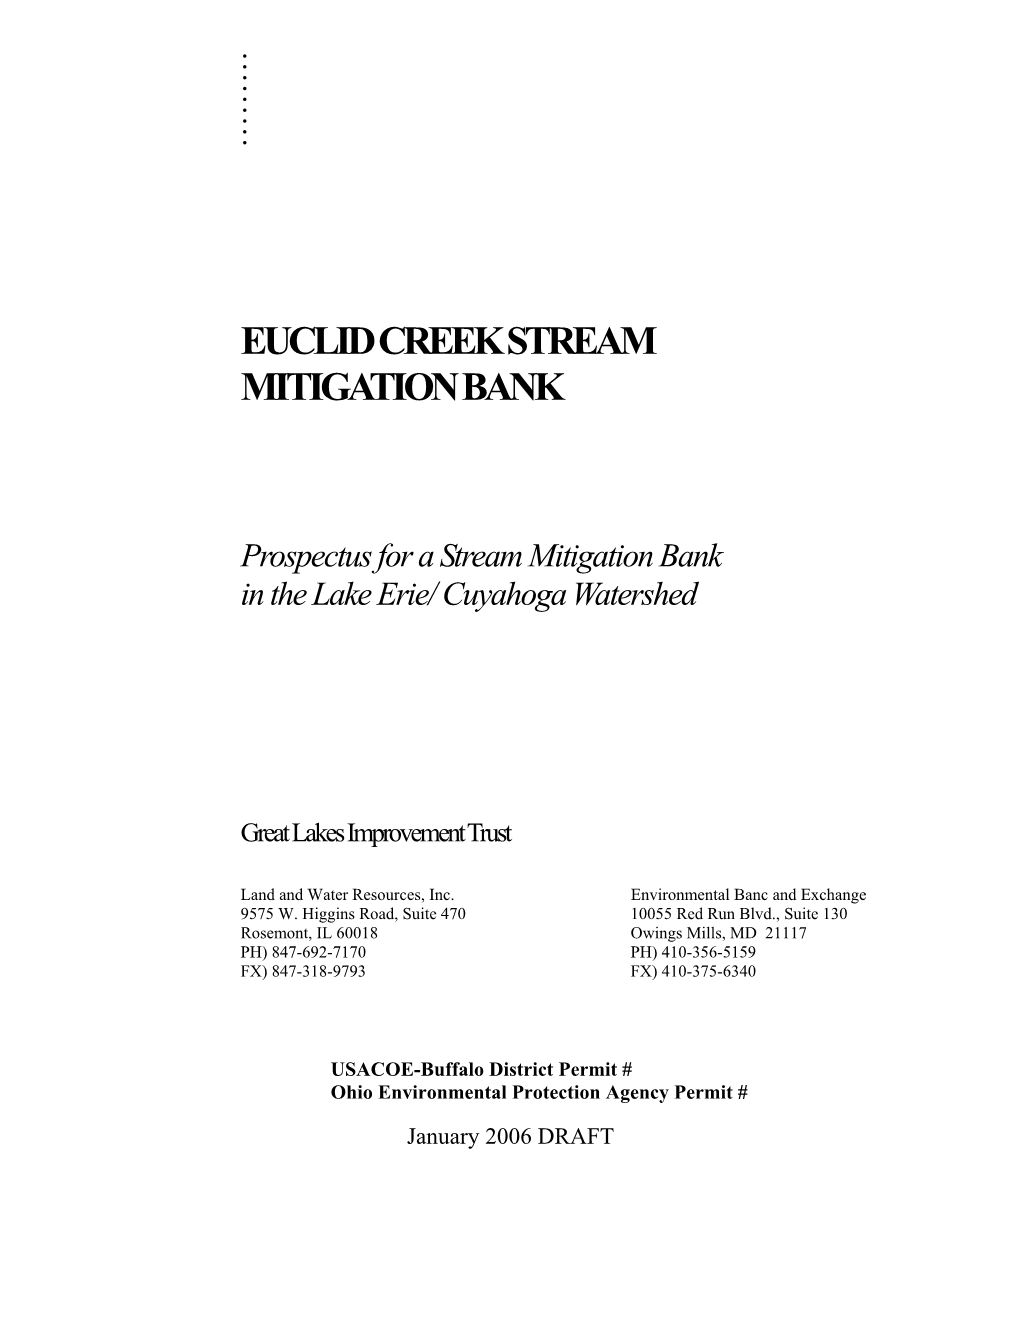 Euclid Creek Stream Mitigation Bank